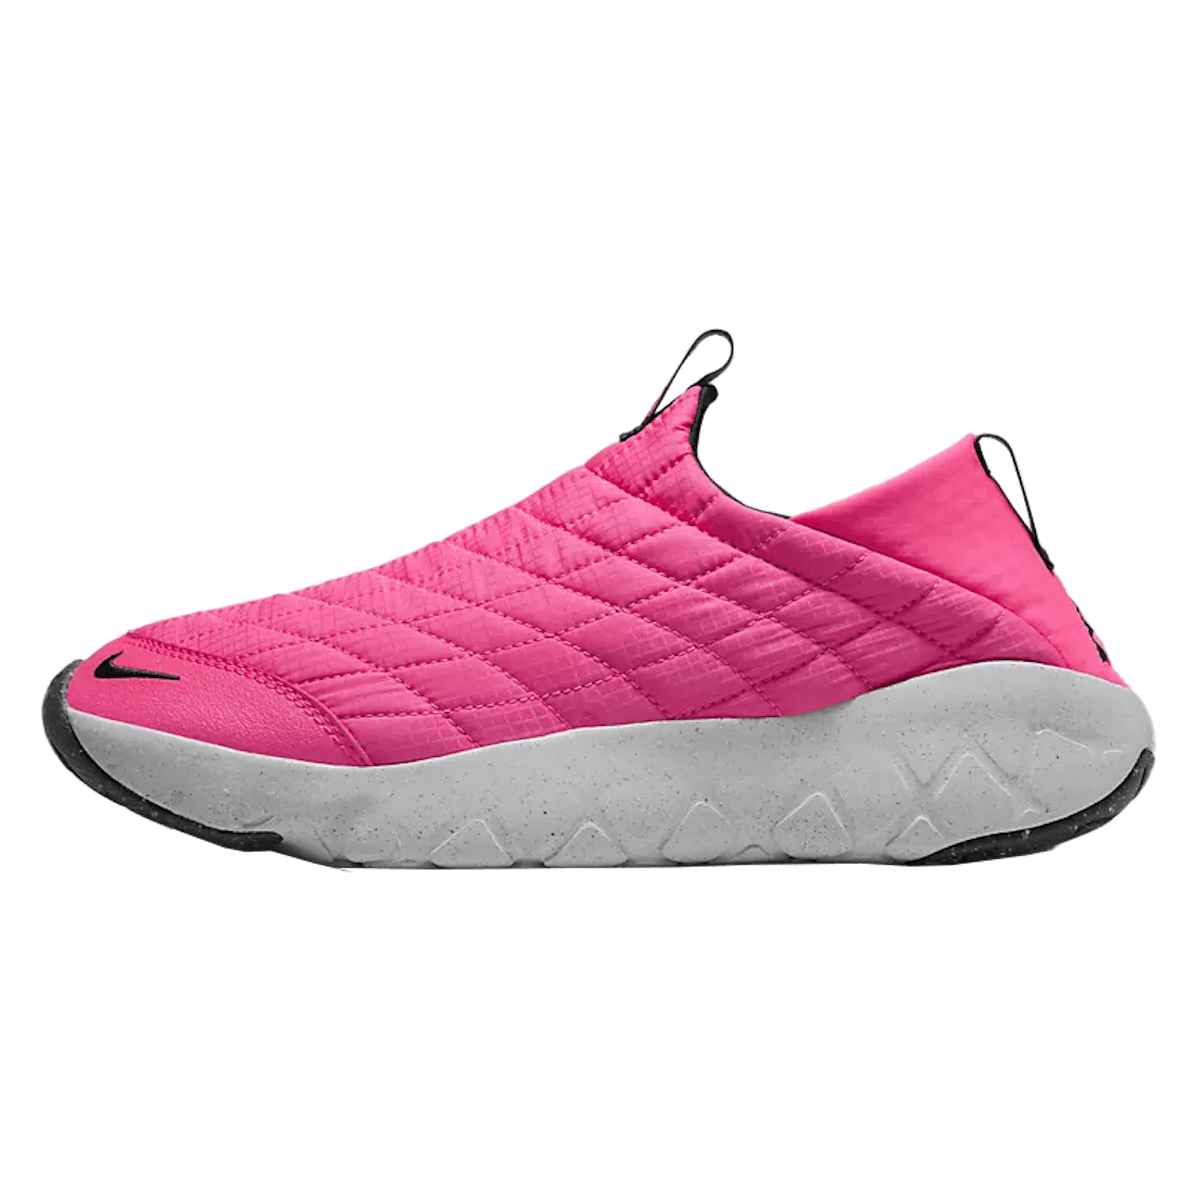 Nike ACG Moc 3.5 "Hyper Pink"